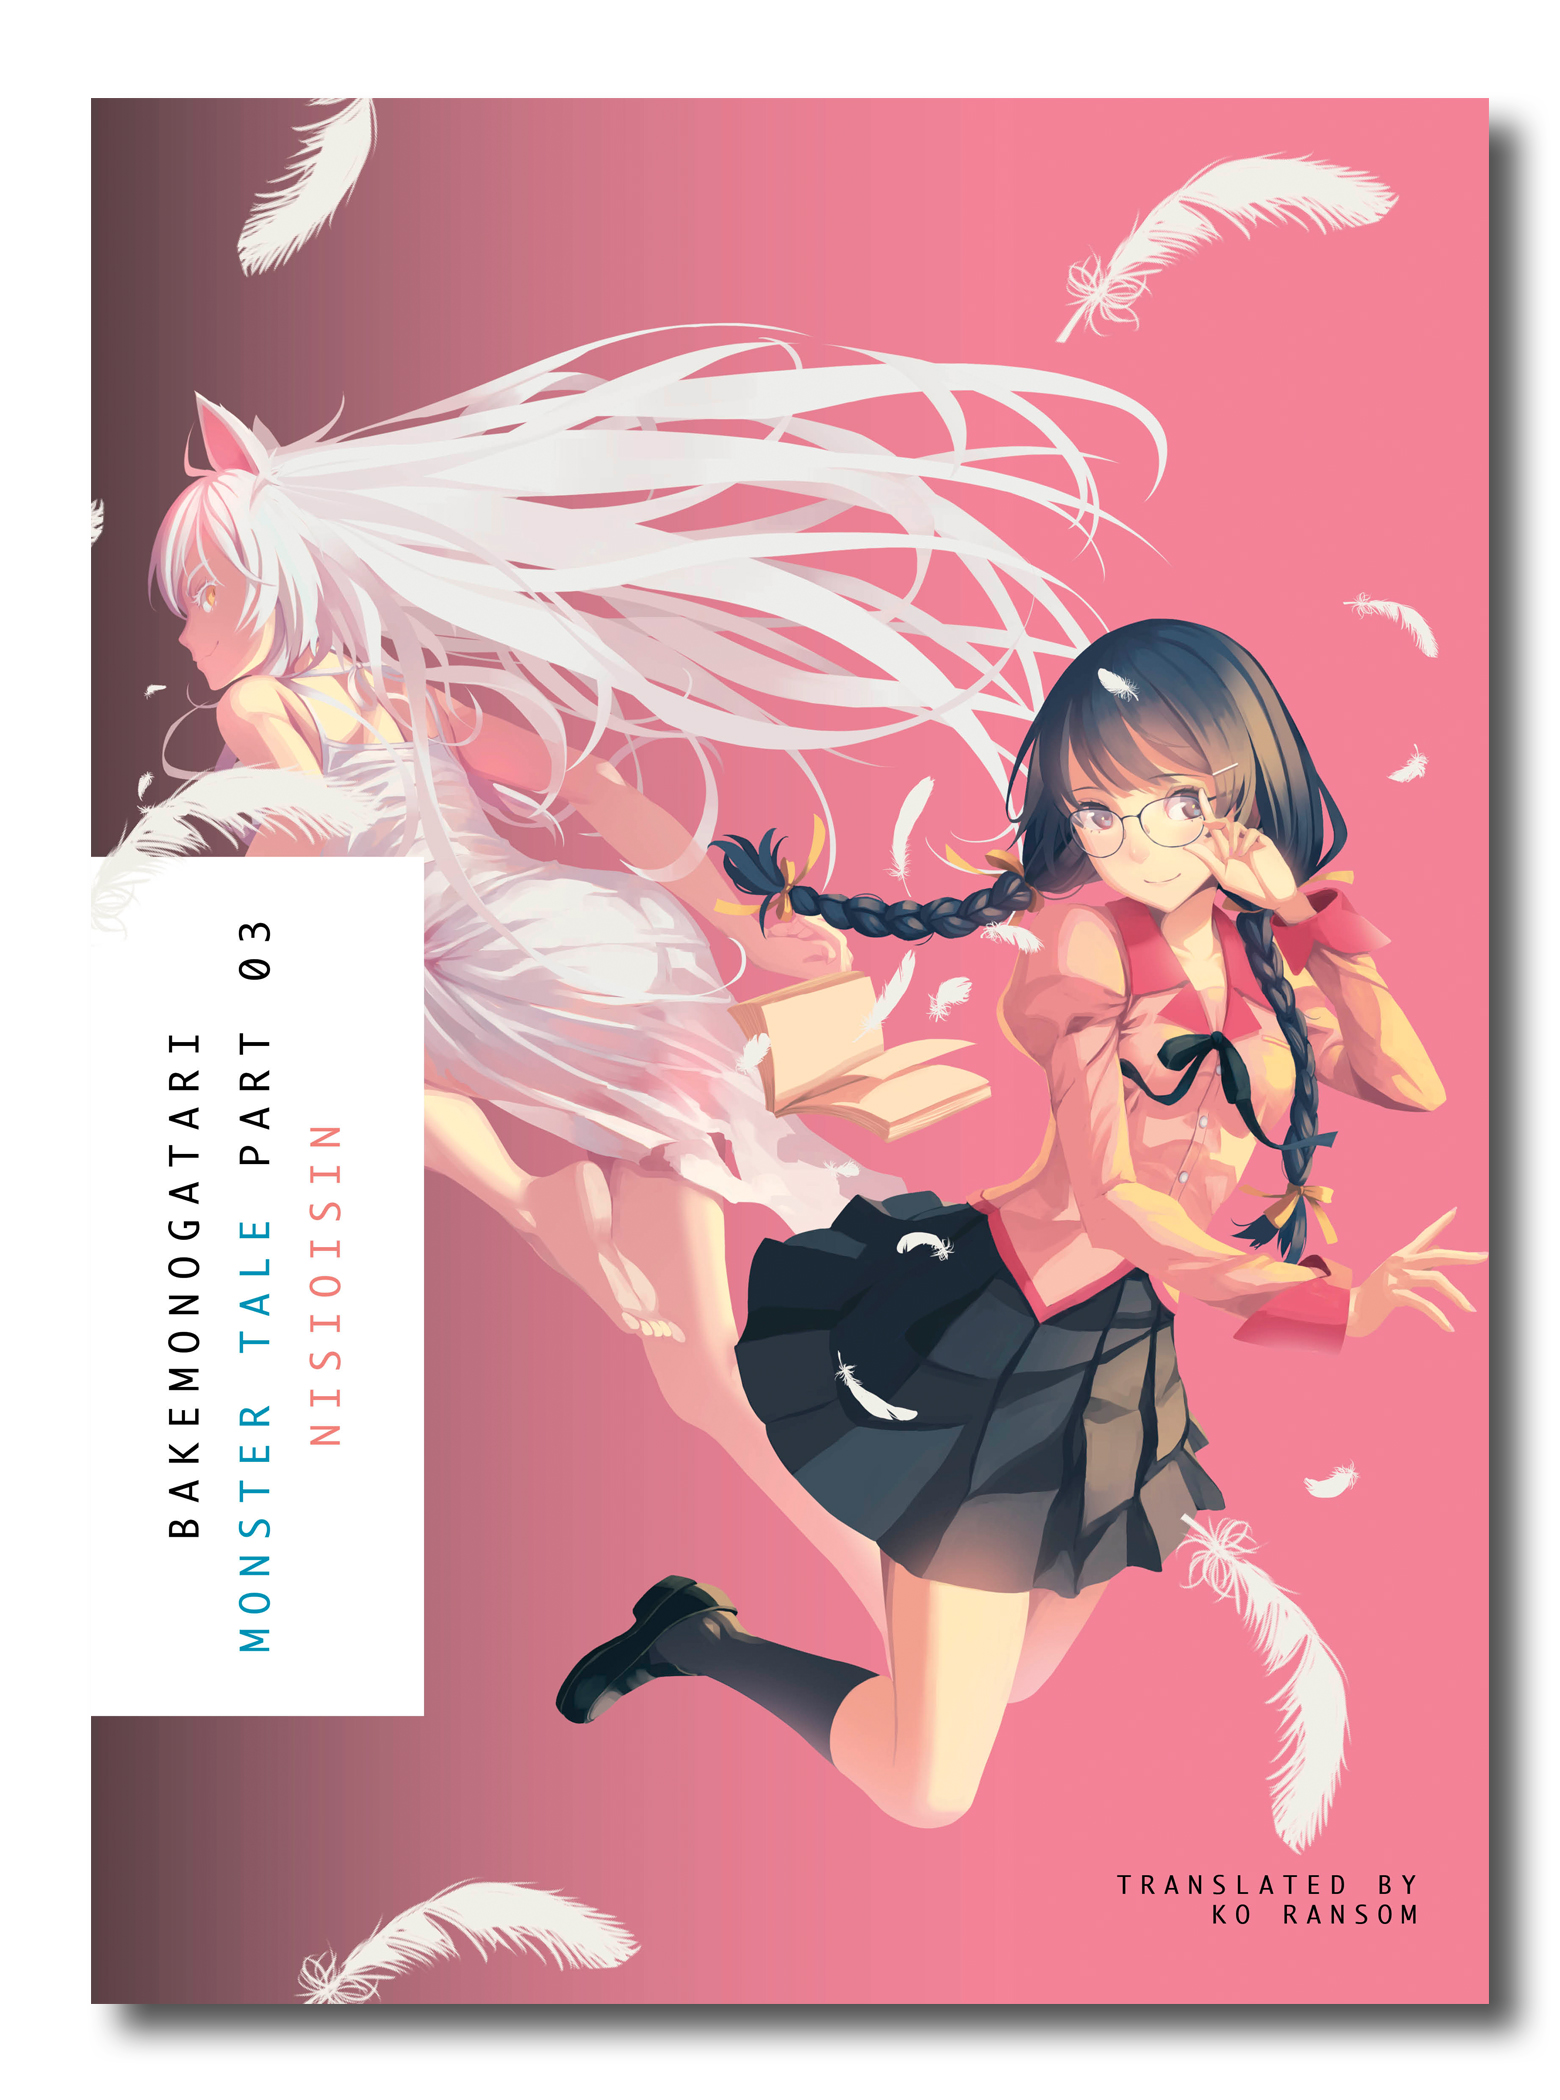 JAPAN Nisio Isin & Oh! great manga LOT: Bakemonogatari vol.1~10 Set